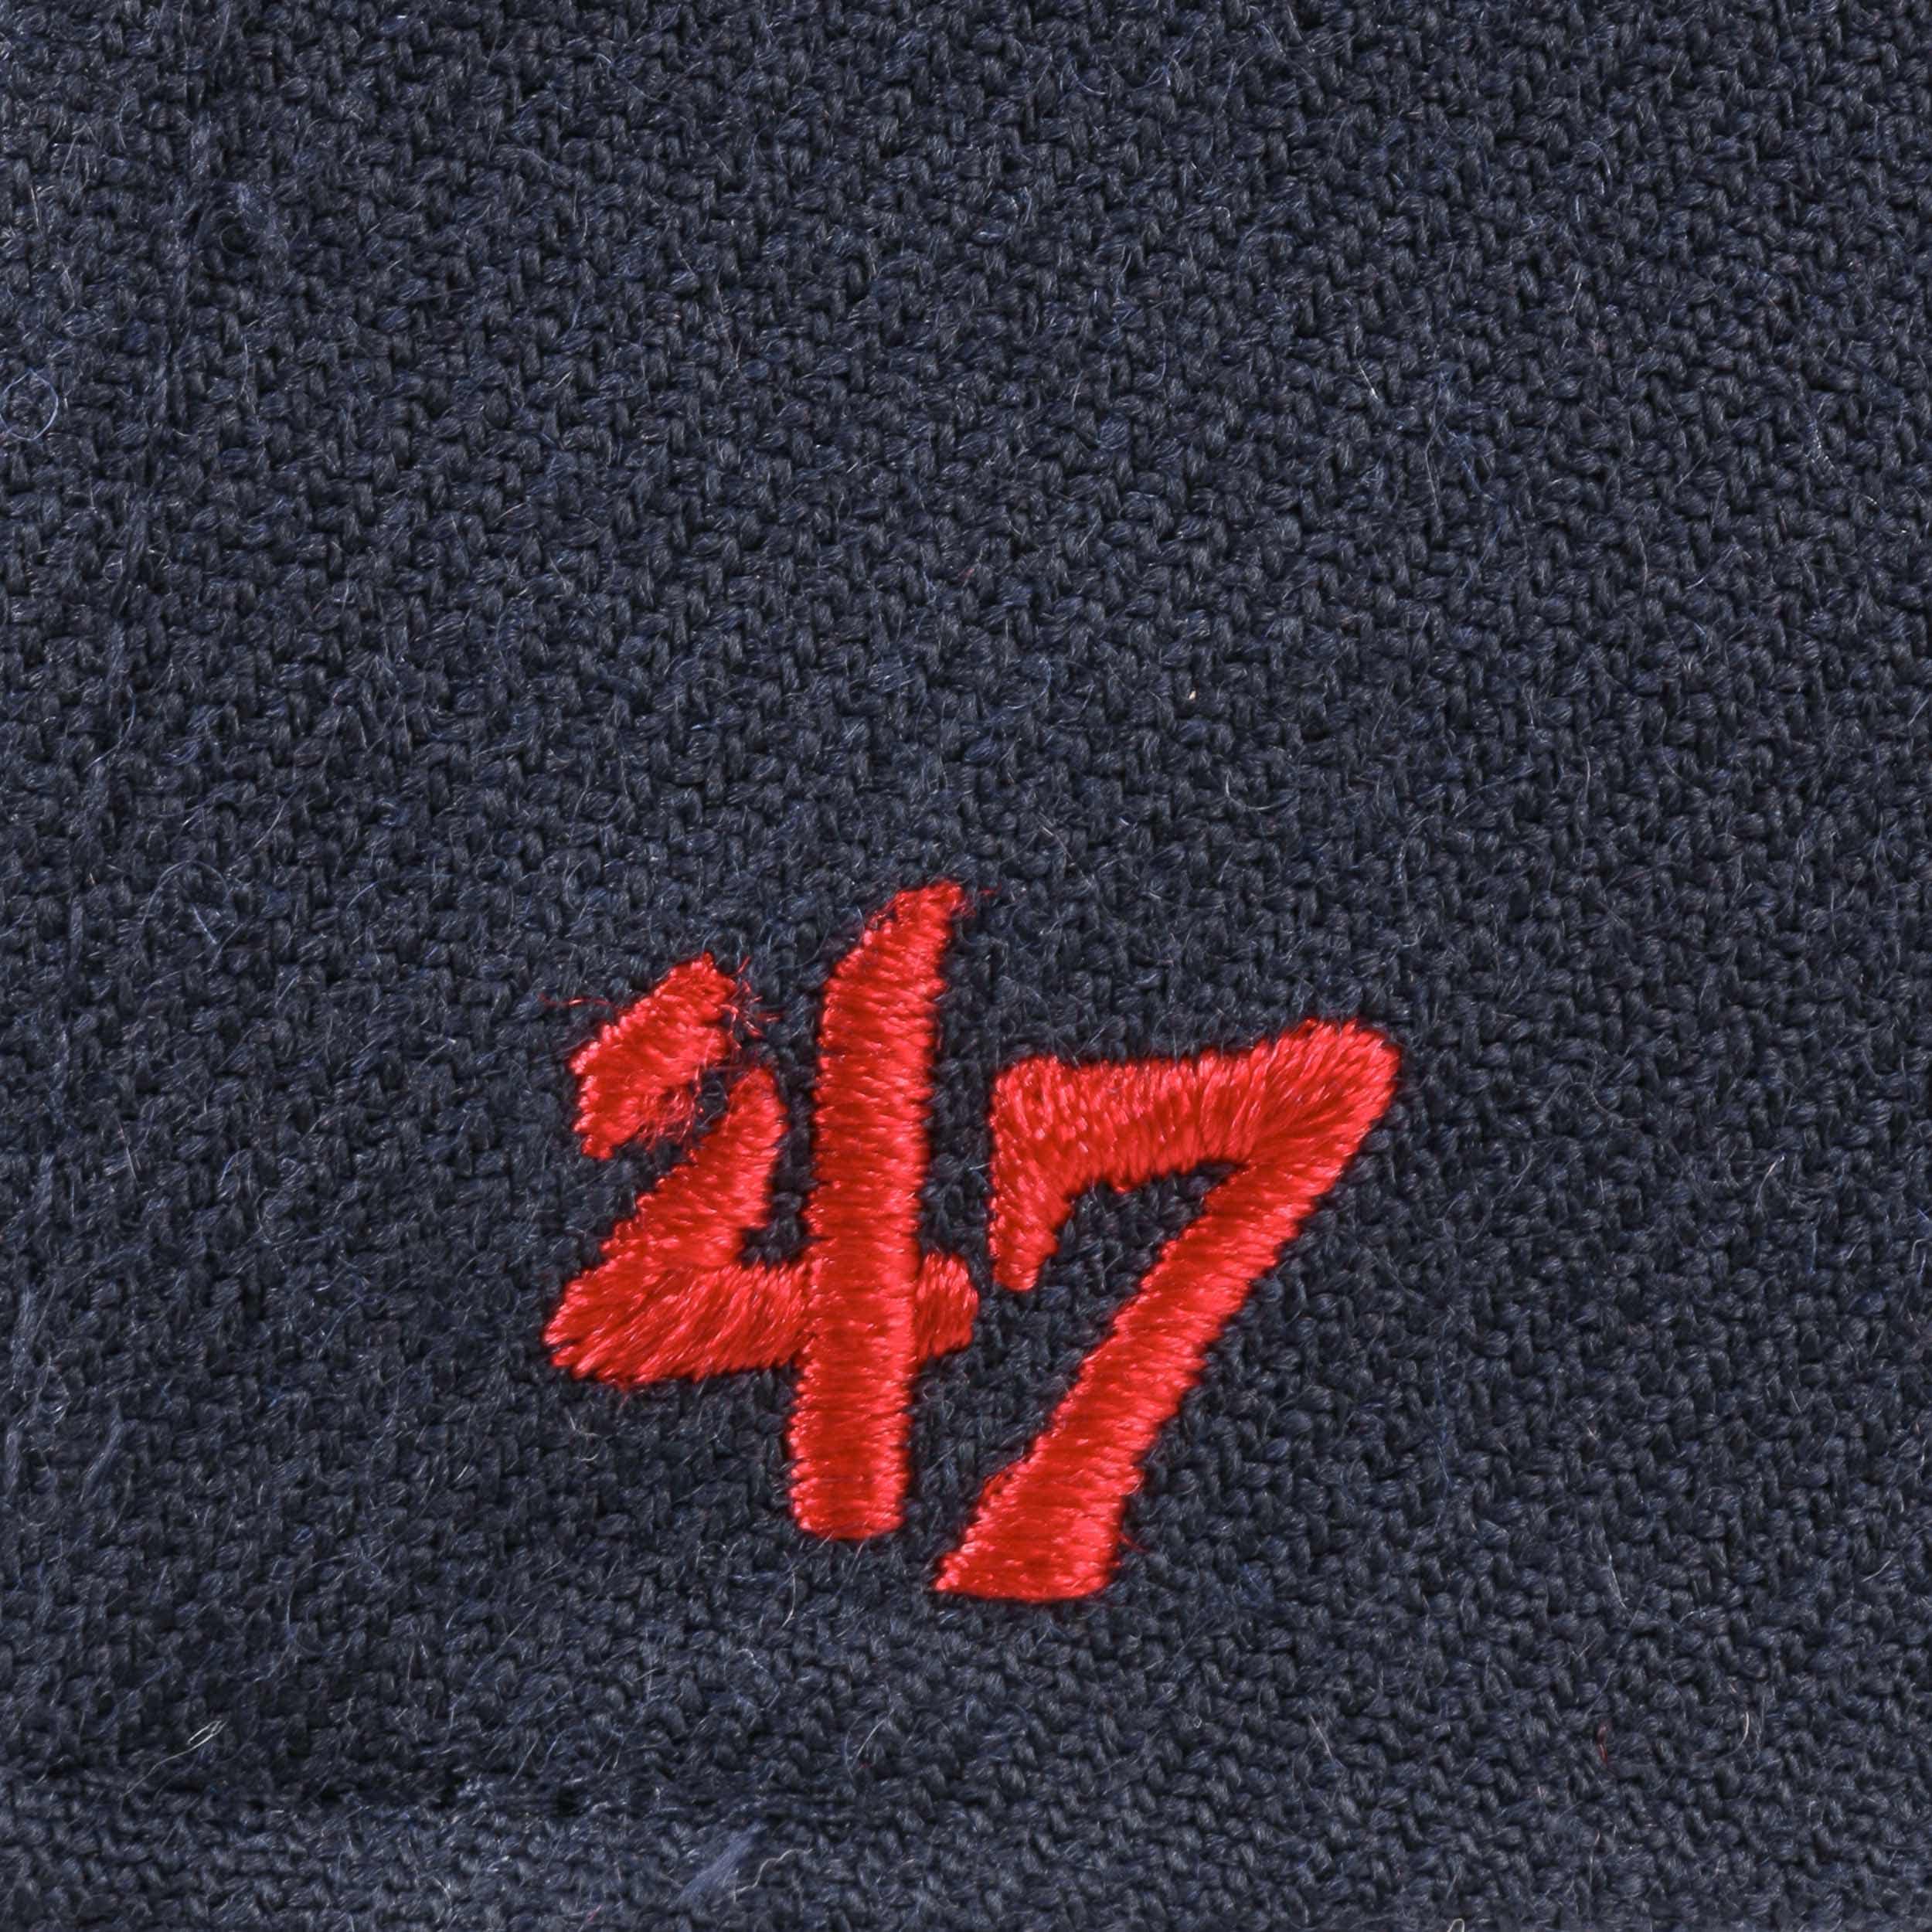 Boston Red Sox Strapback Cap by 47 Brand